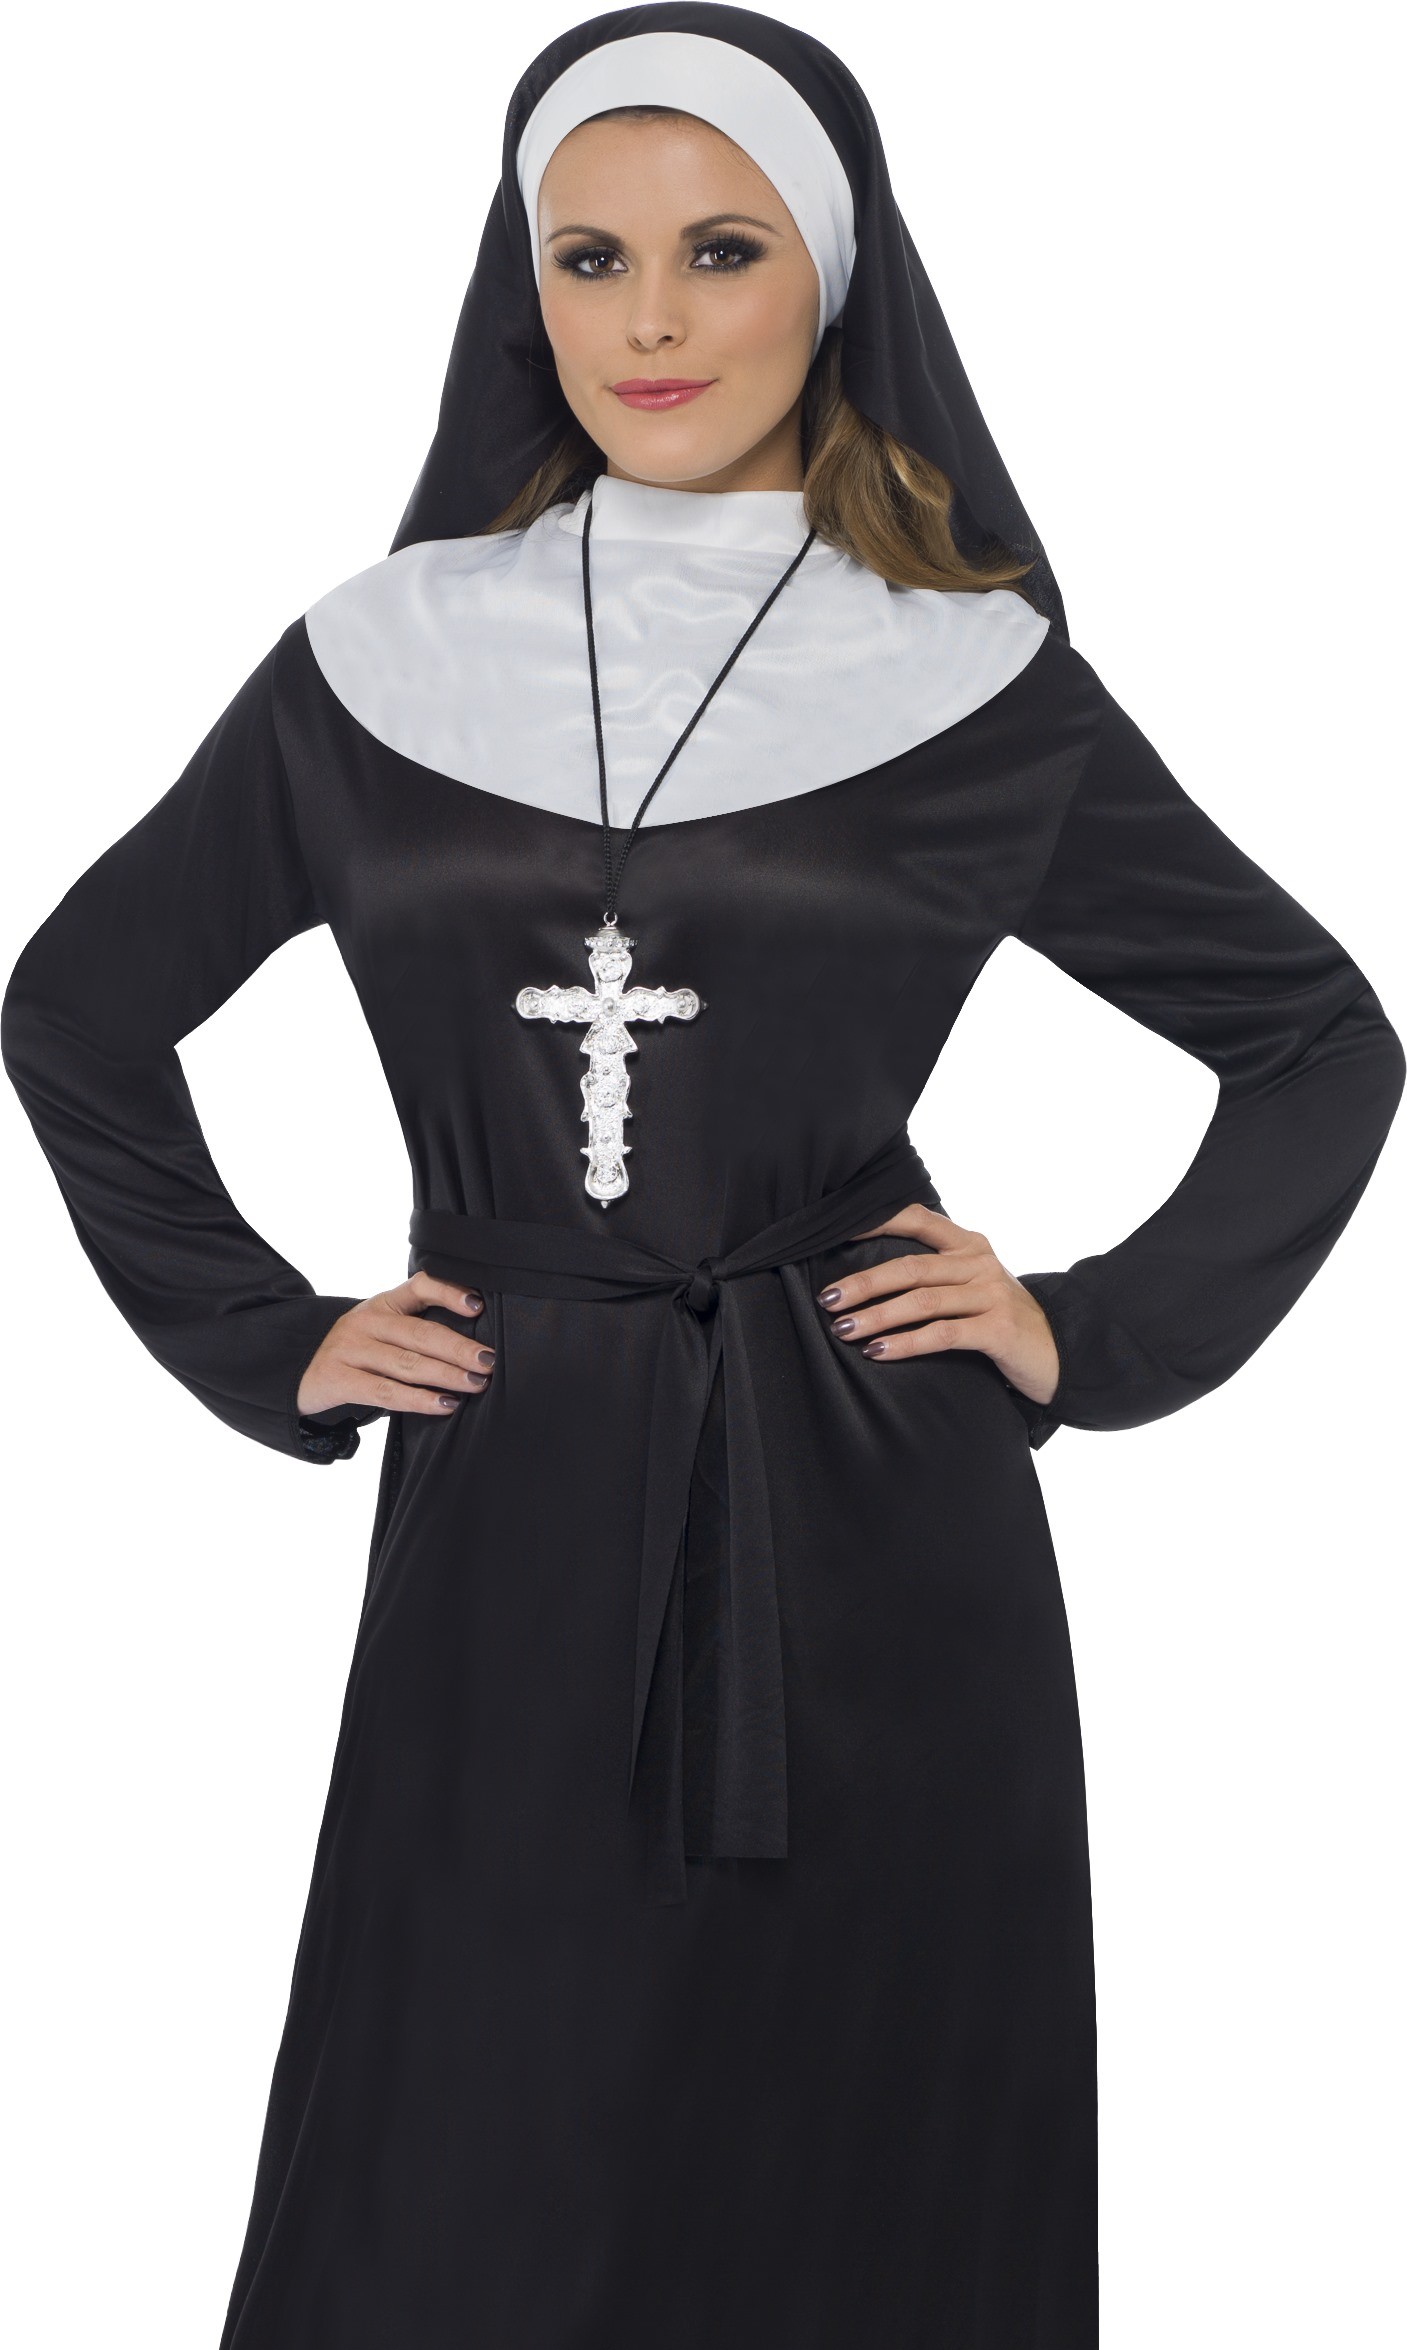 Silver Cross Necklace Nun Vicar Priest Men Ladies Fancy Dress Costume Halloween